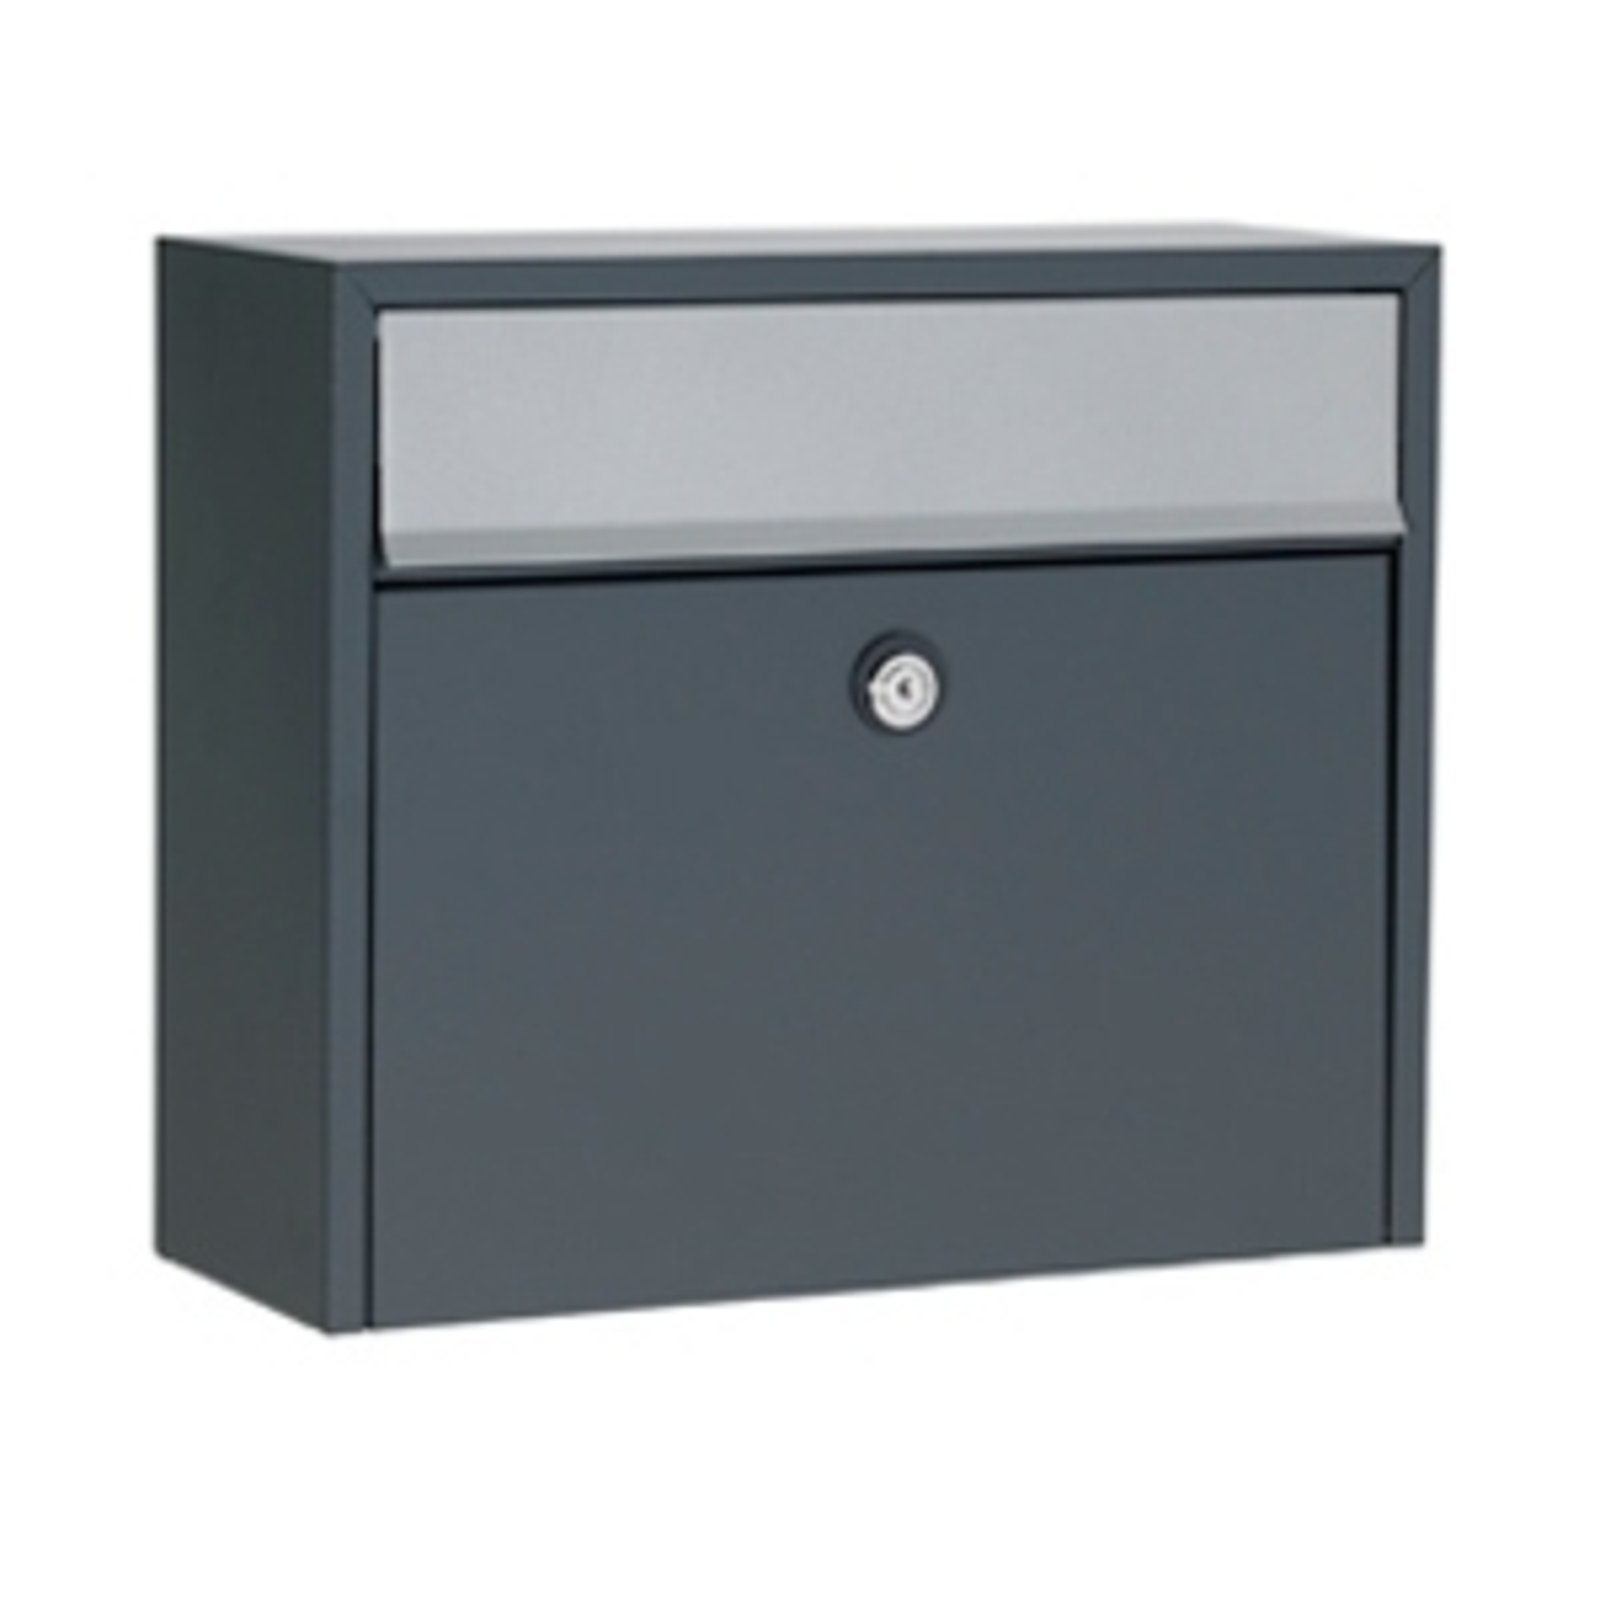 Simple letterbox LT150, anthracite, Euro lock